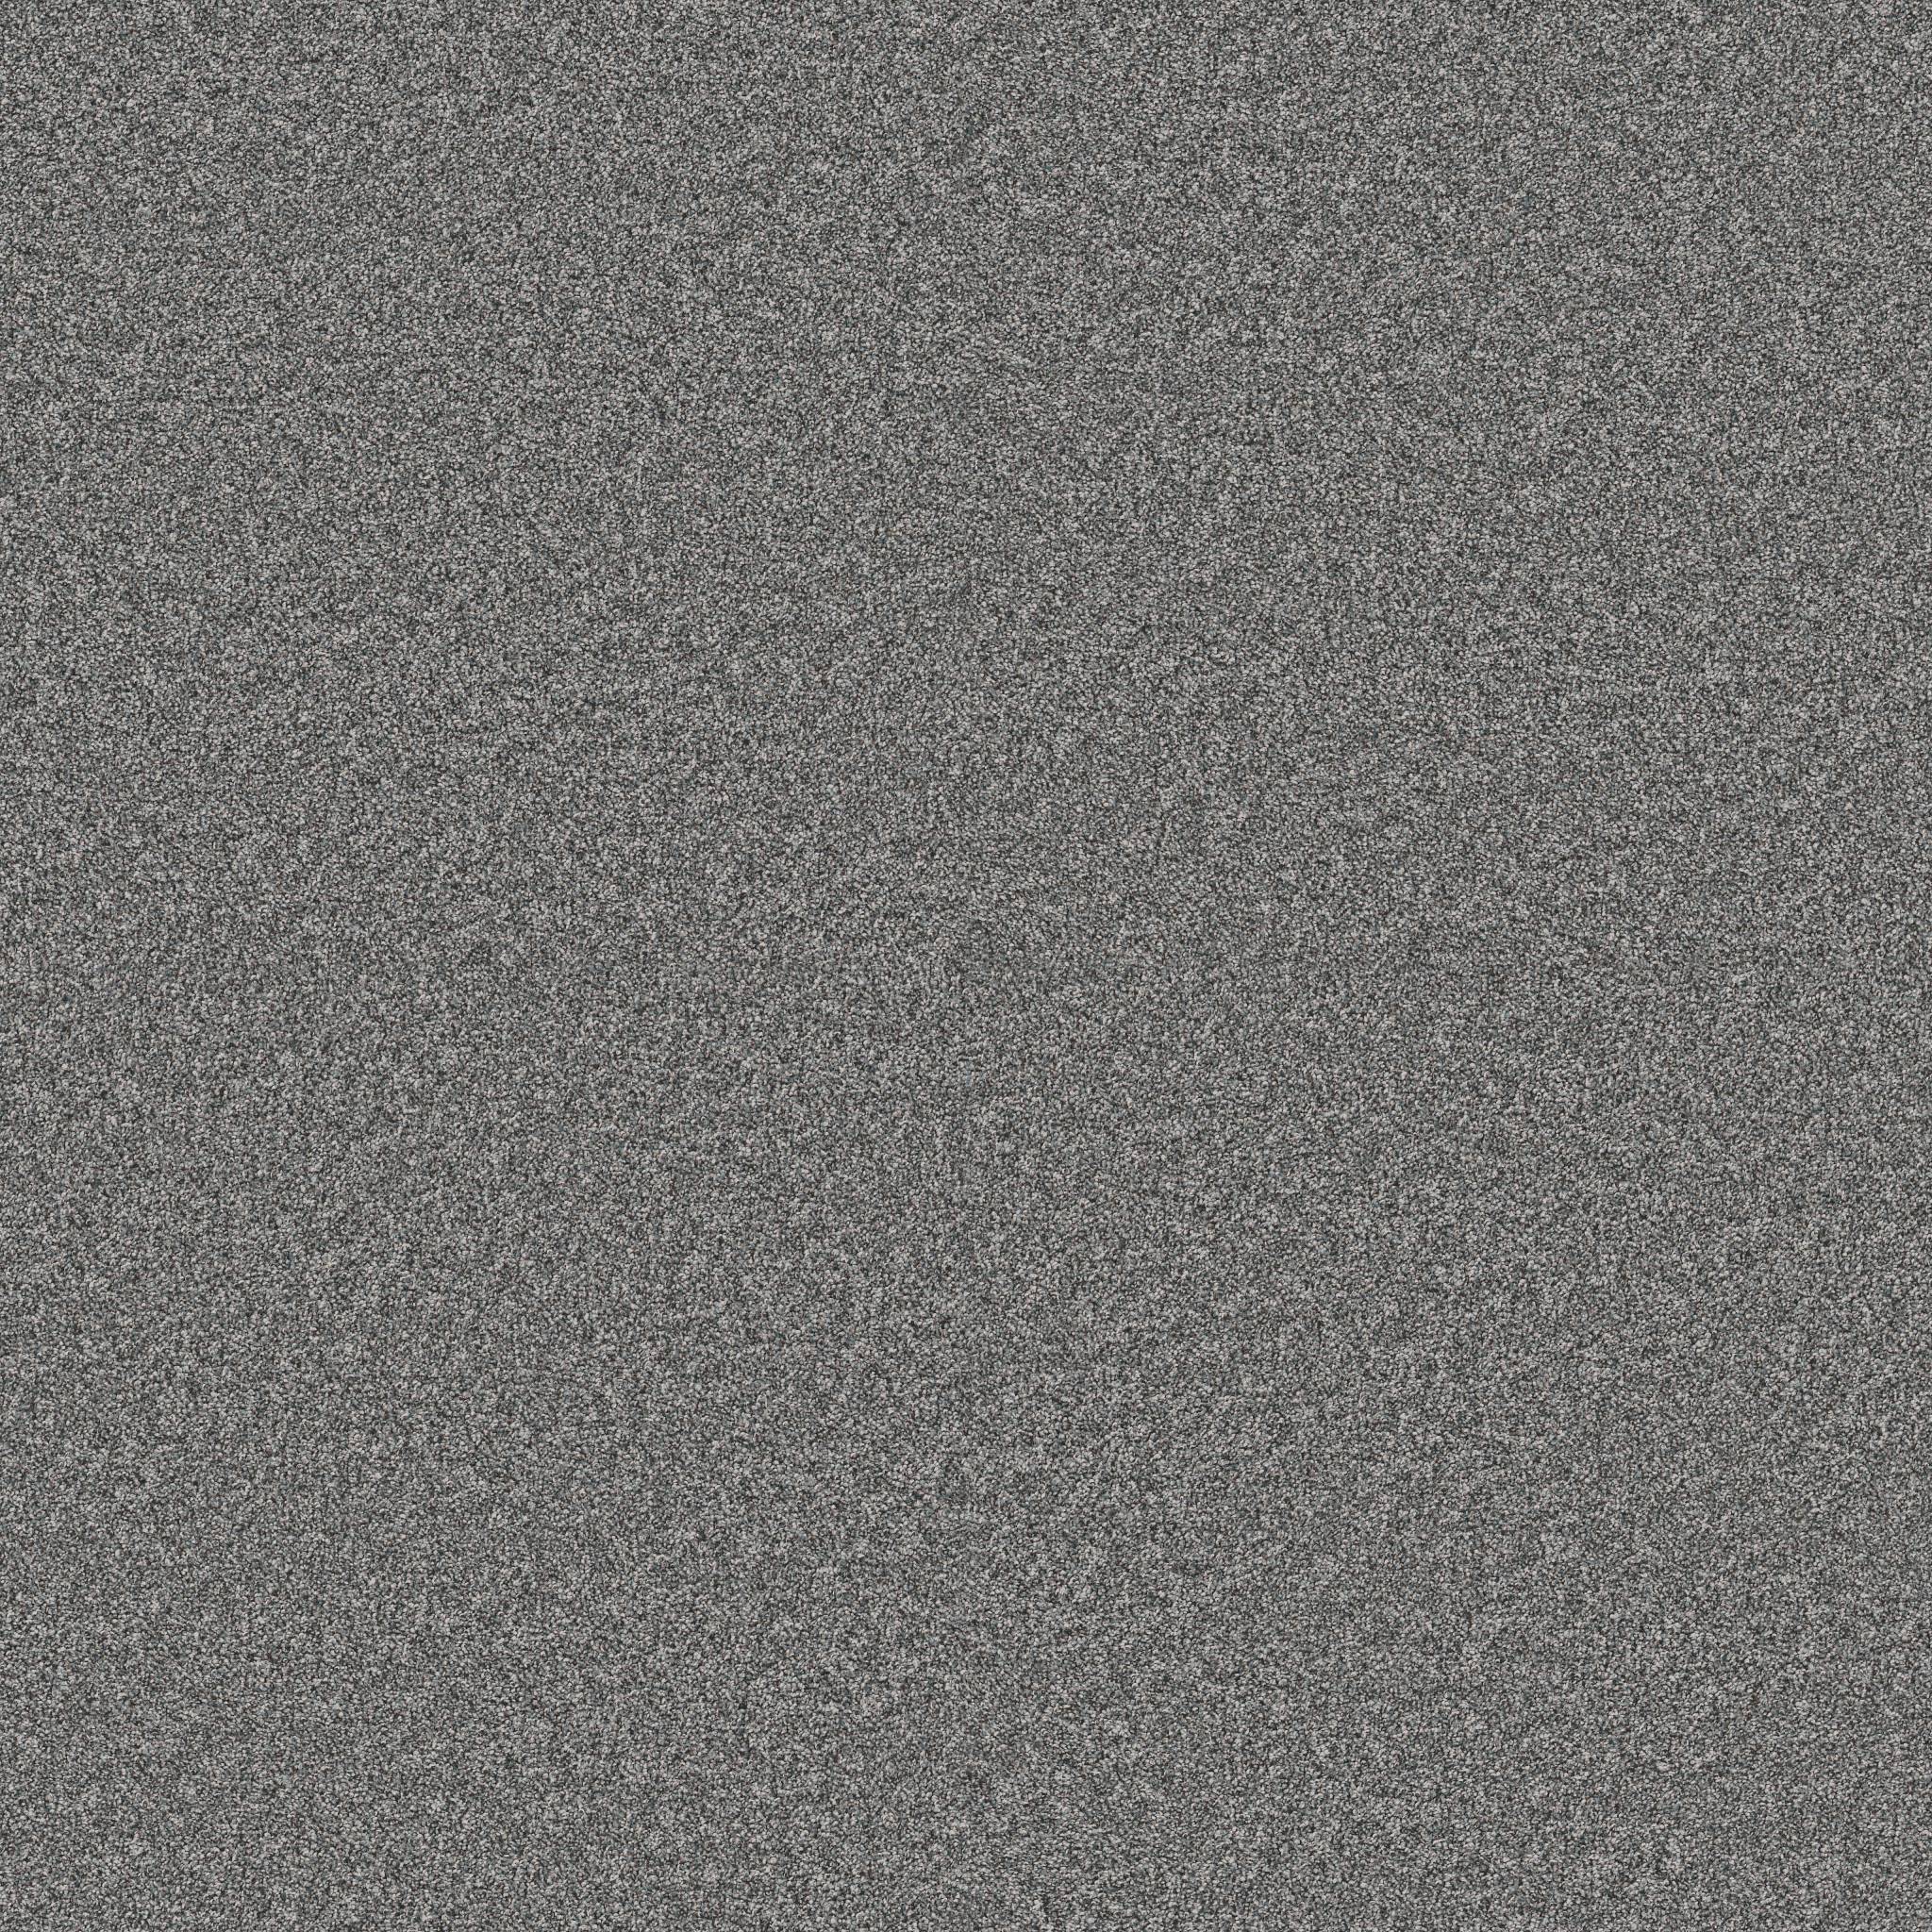 Kaleidoscope Carpet - Seafoam Zoomed Swatch Image